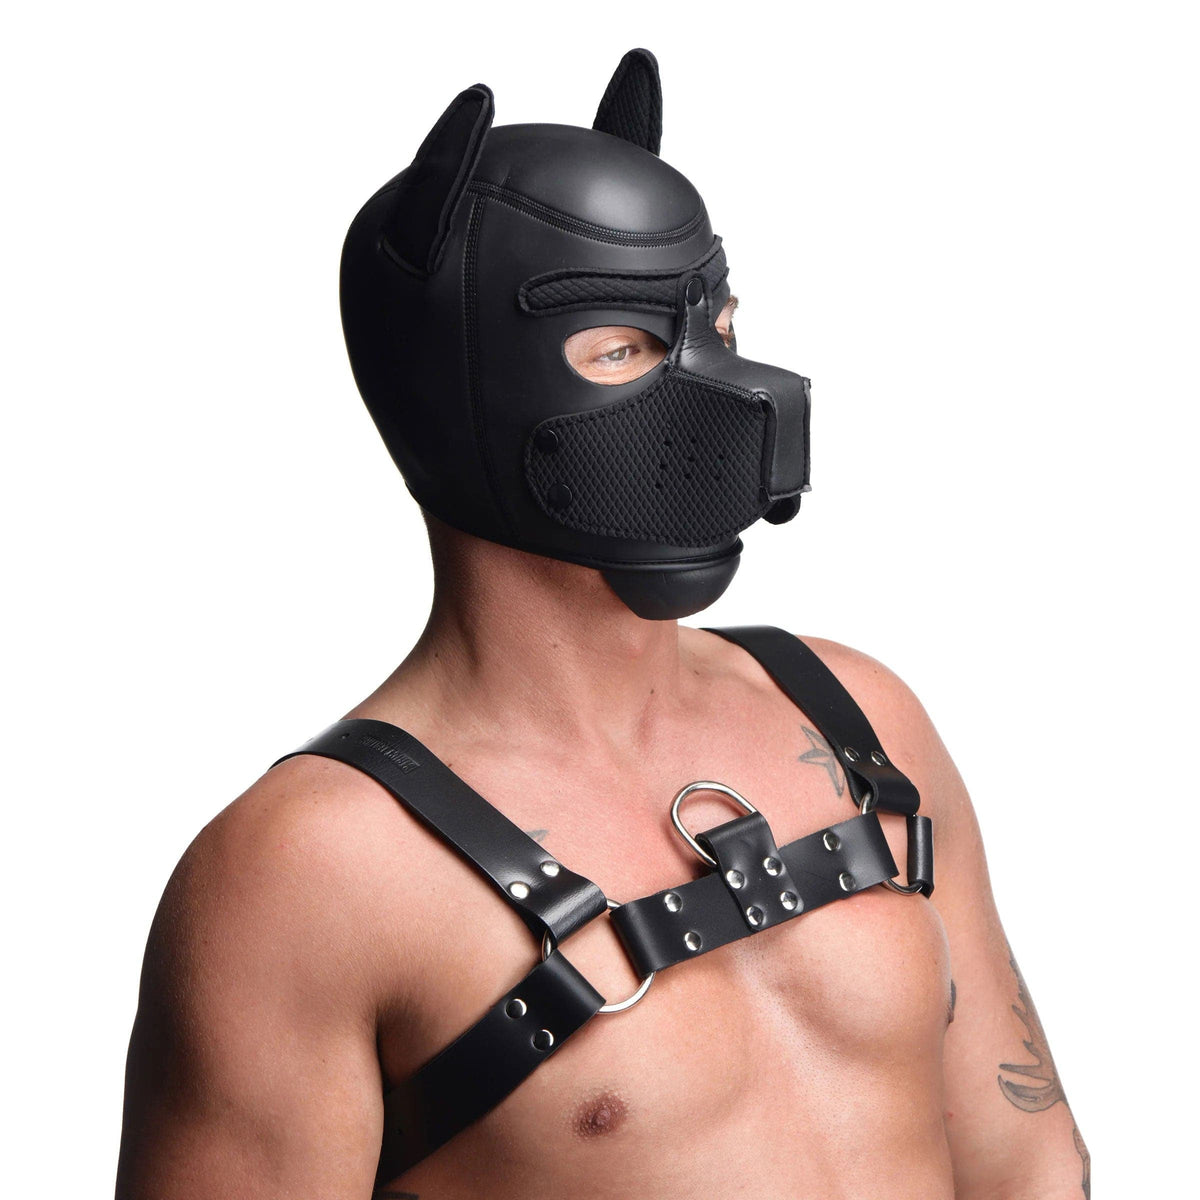 spike neoprene puppy hood black